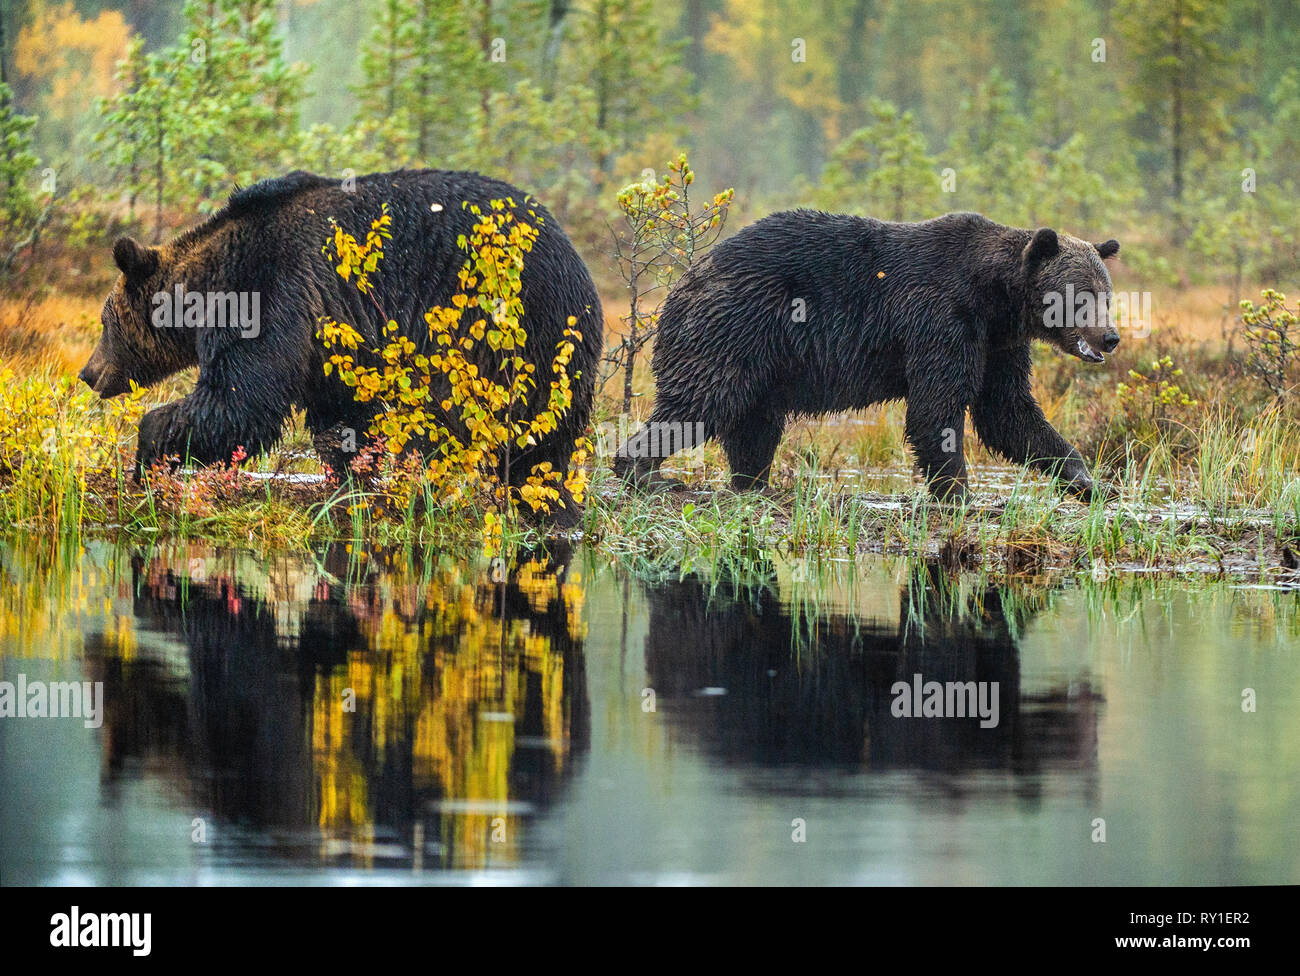 A brown bears  on the bog. Adult Wild Big Brown Bears . Scientific name: Ursus arctos. Natural habitat. Autumn season. Stock Photo